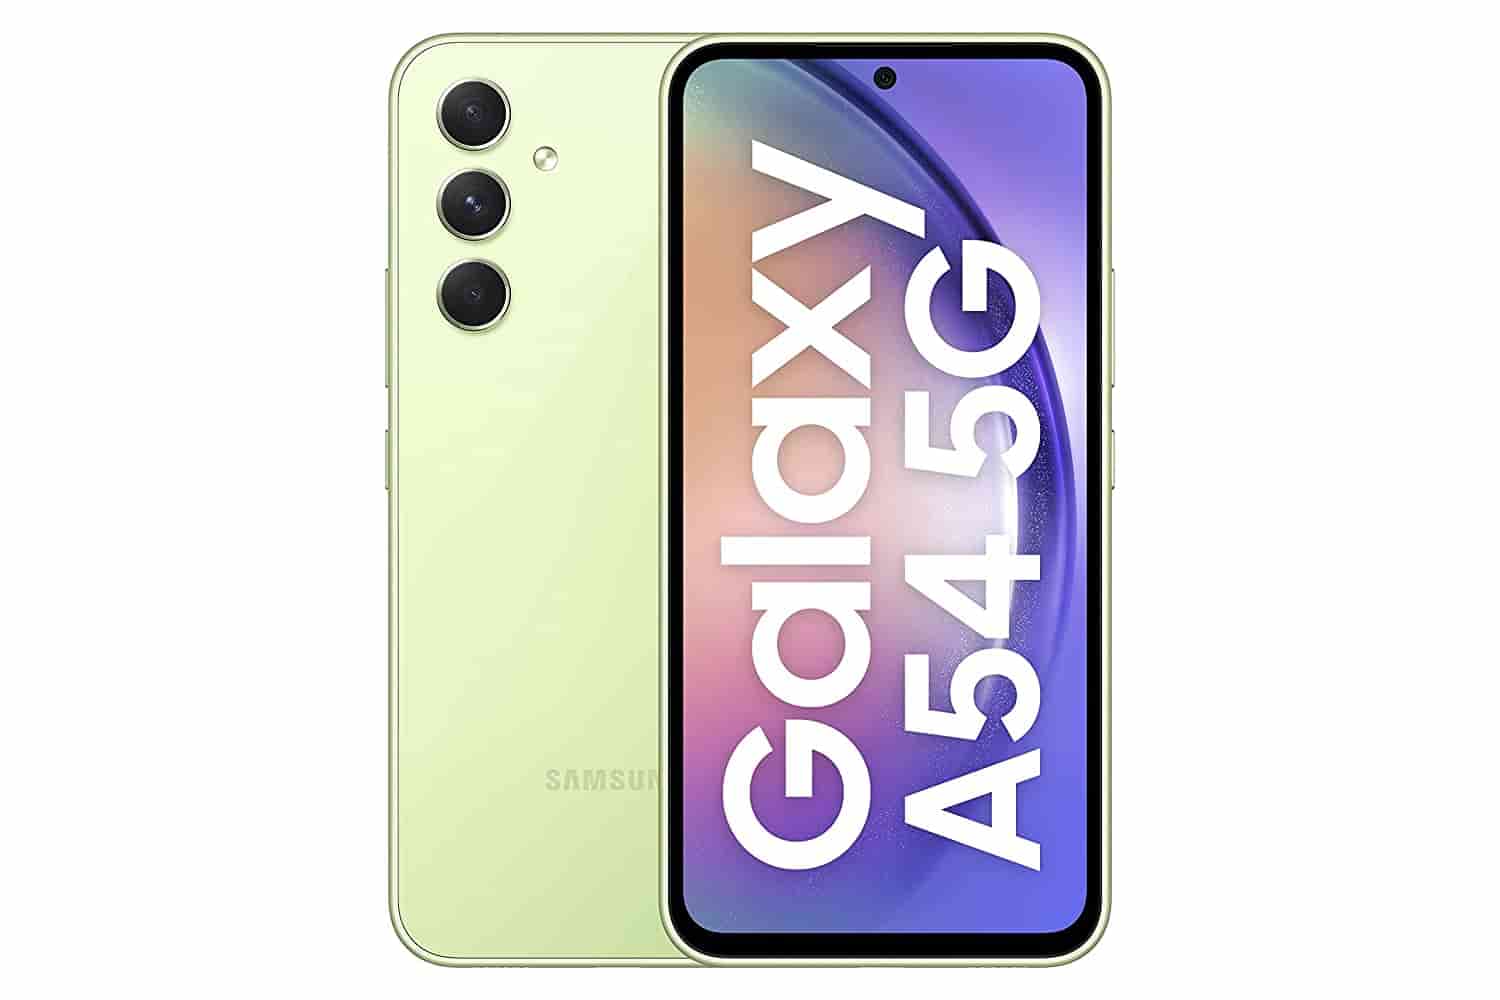 Galaxy A54 5G 8Go + 256Go – Lime – Virgin Megastore